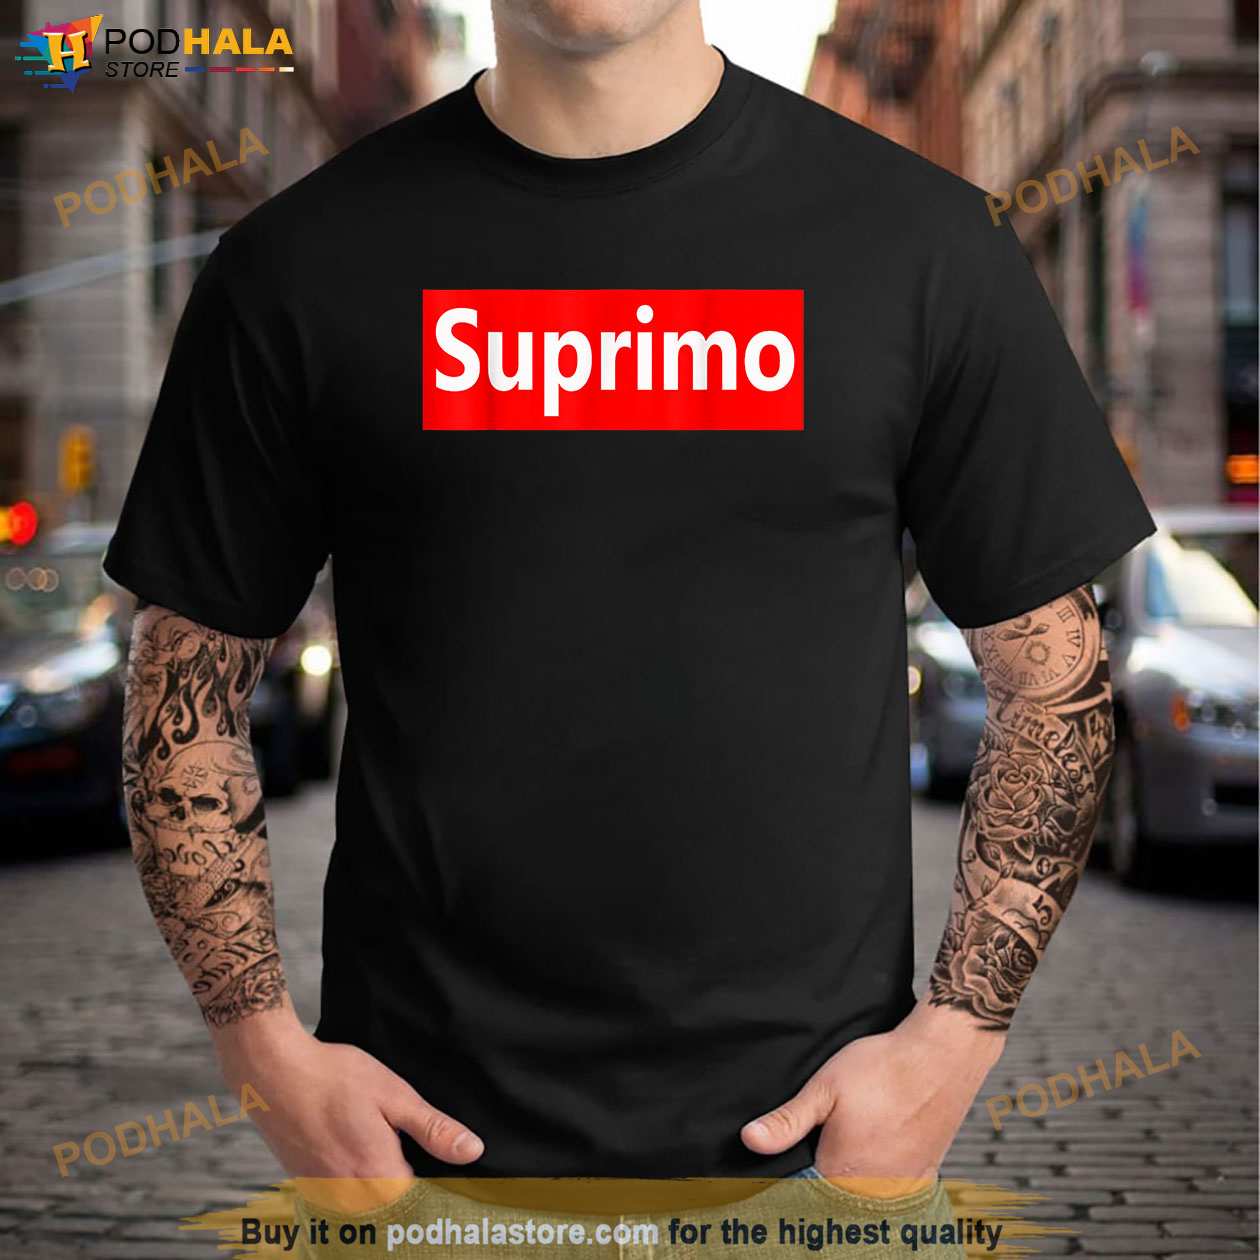 Supreme T-Shirts & Vests